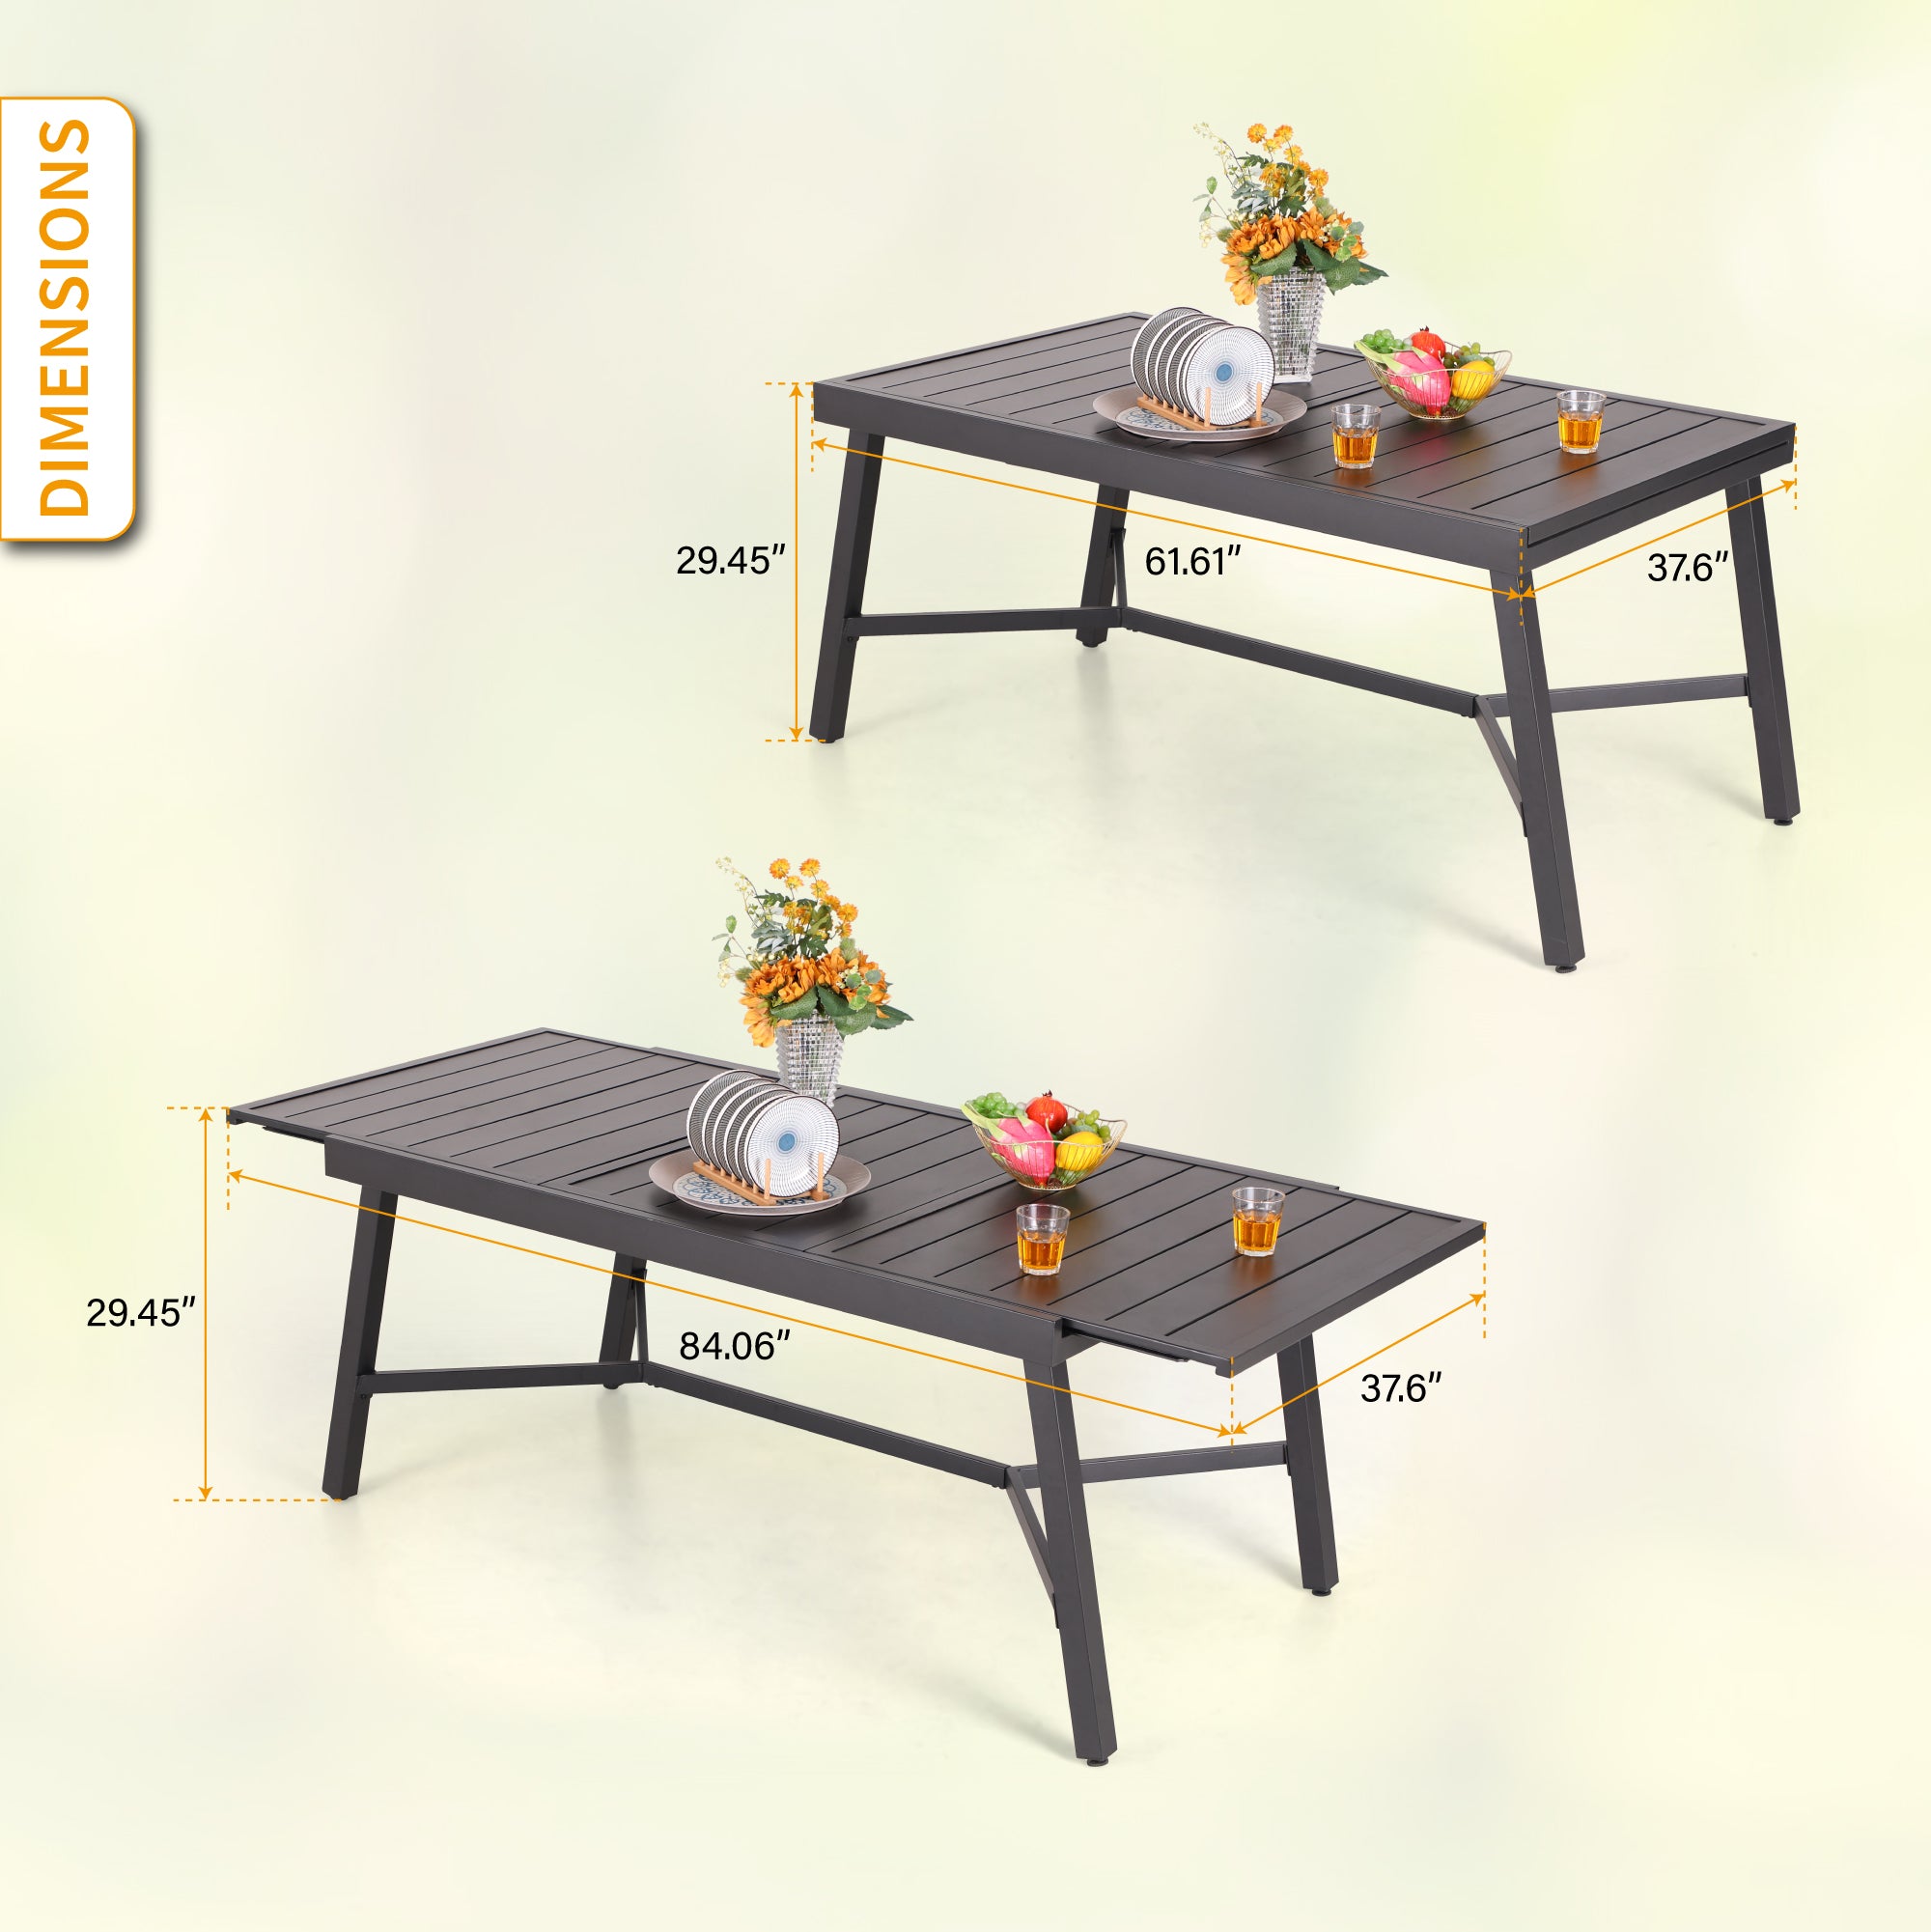 PHI VILLA 9/7-Piece Patio Dining Set Reinforced Extendable Table & Textilene Swivel Chairs